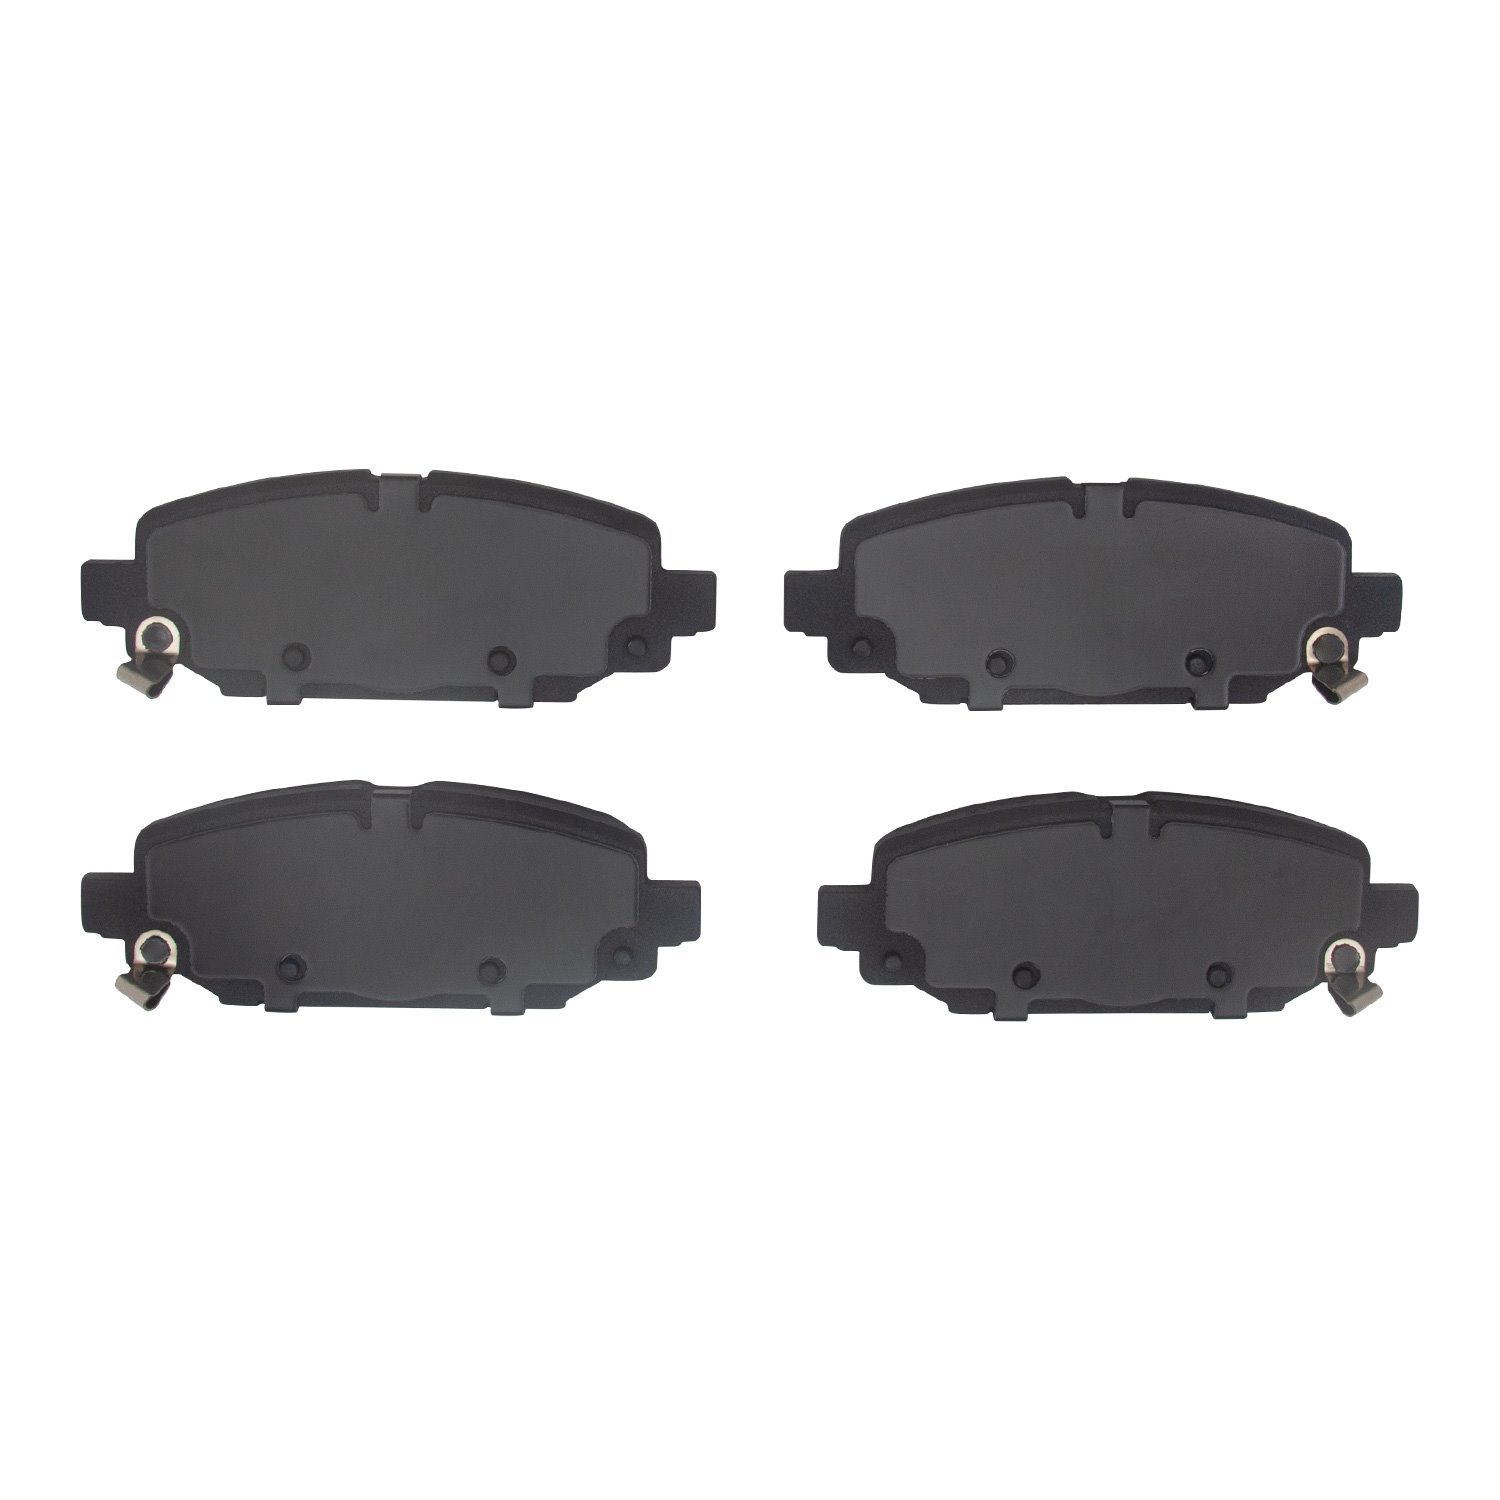 1310-2172-00 3000-Series Ceramic Brake Pads, Fits Select Mopar, Position: Rear